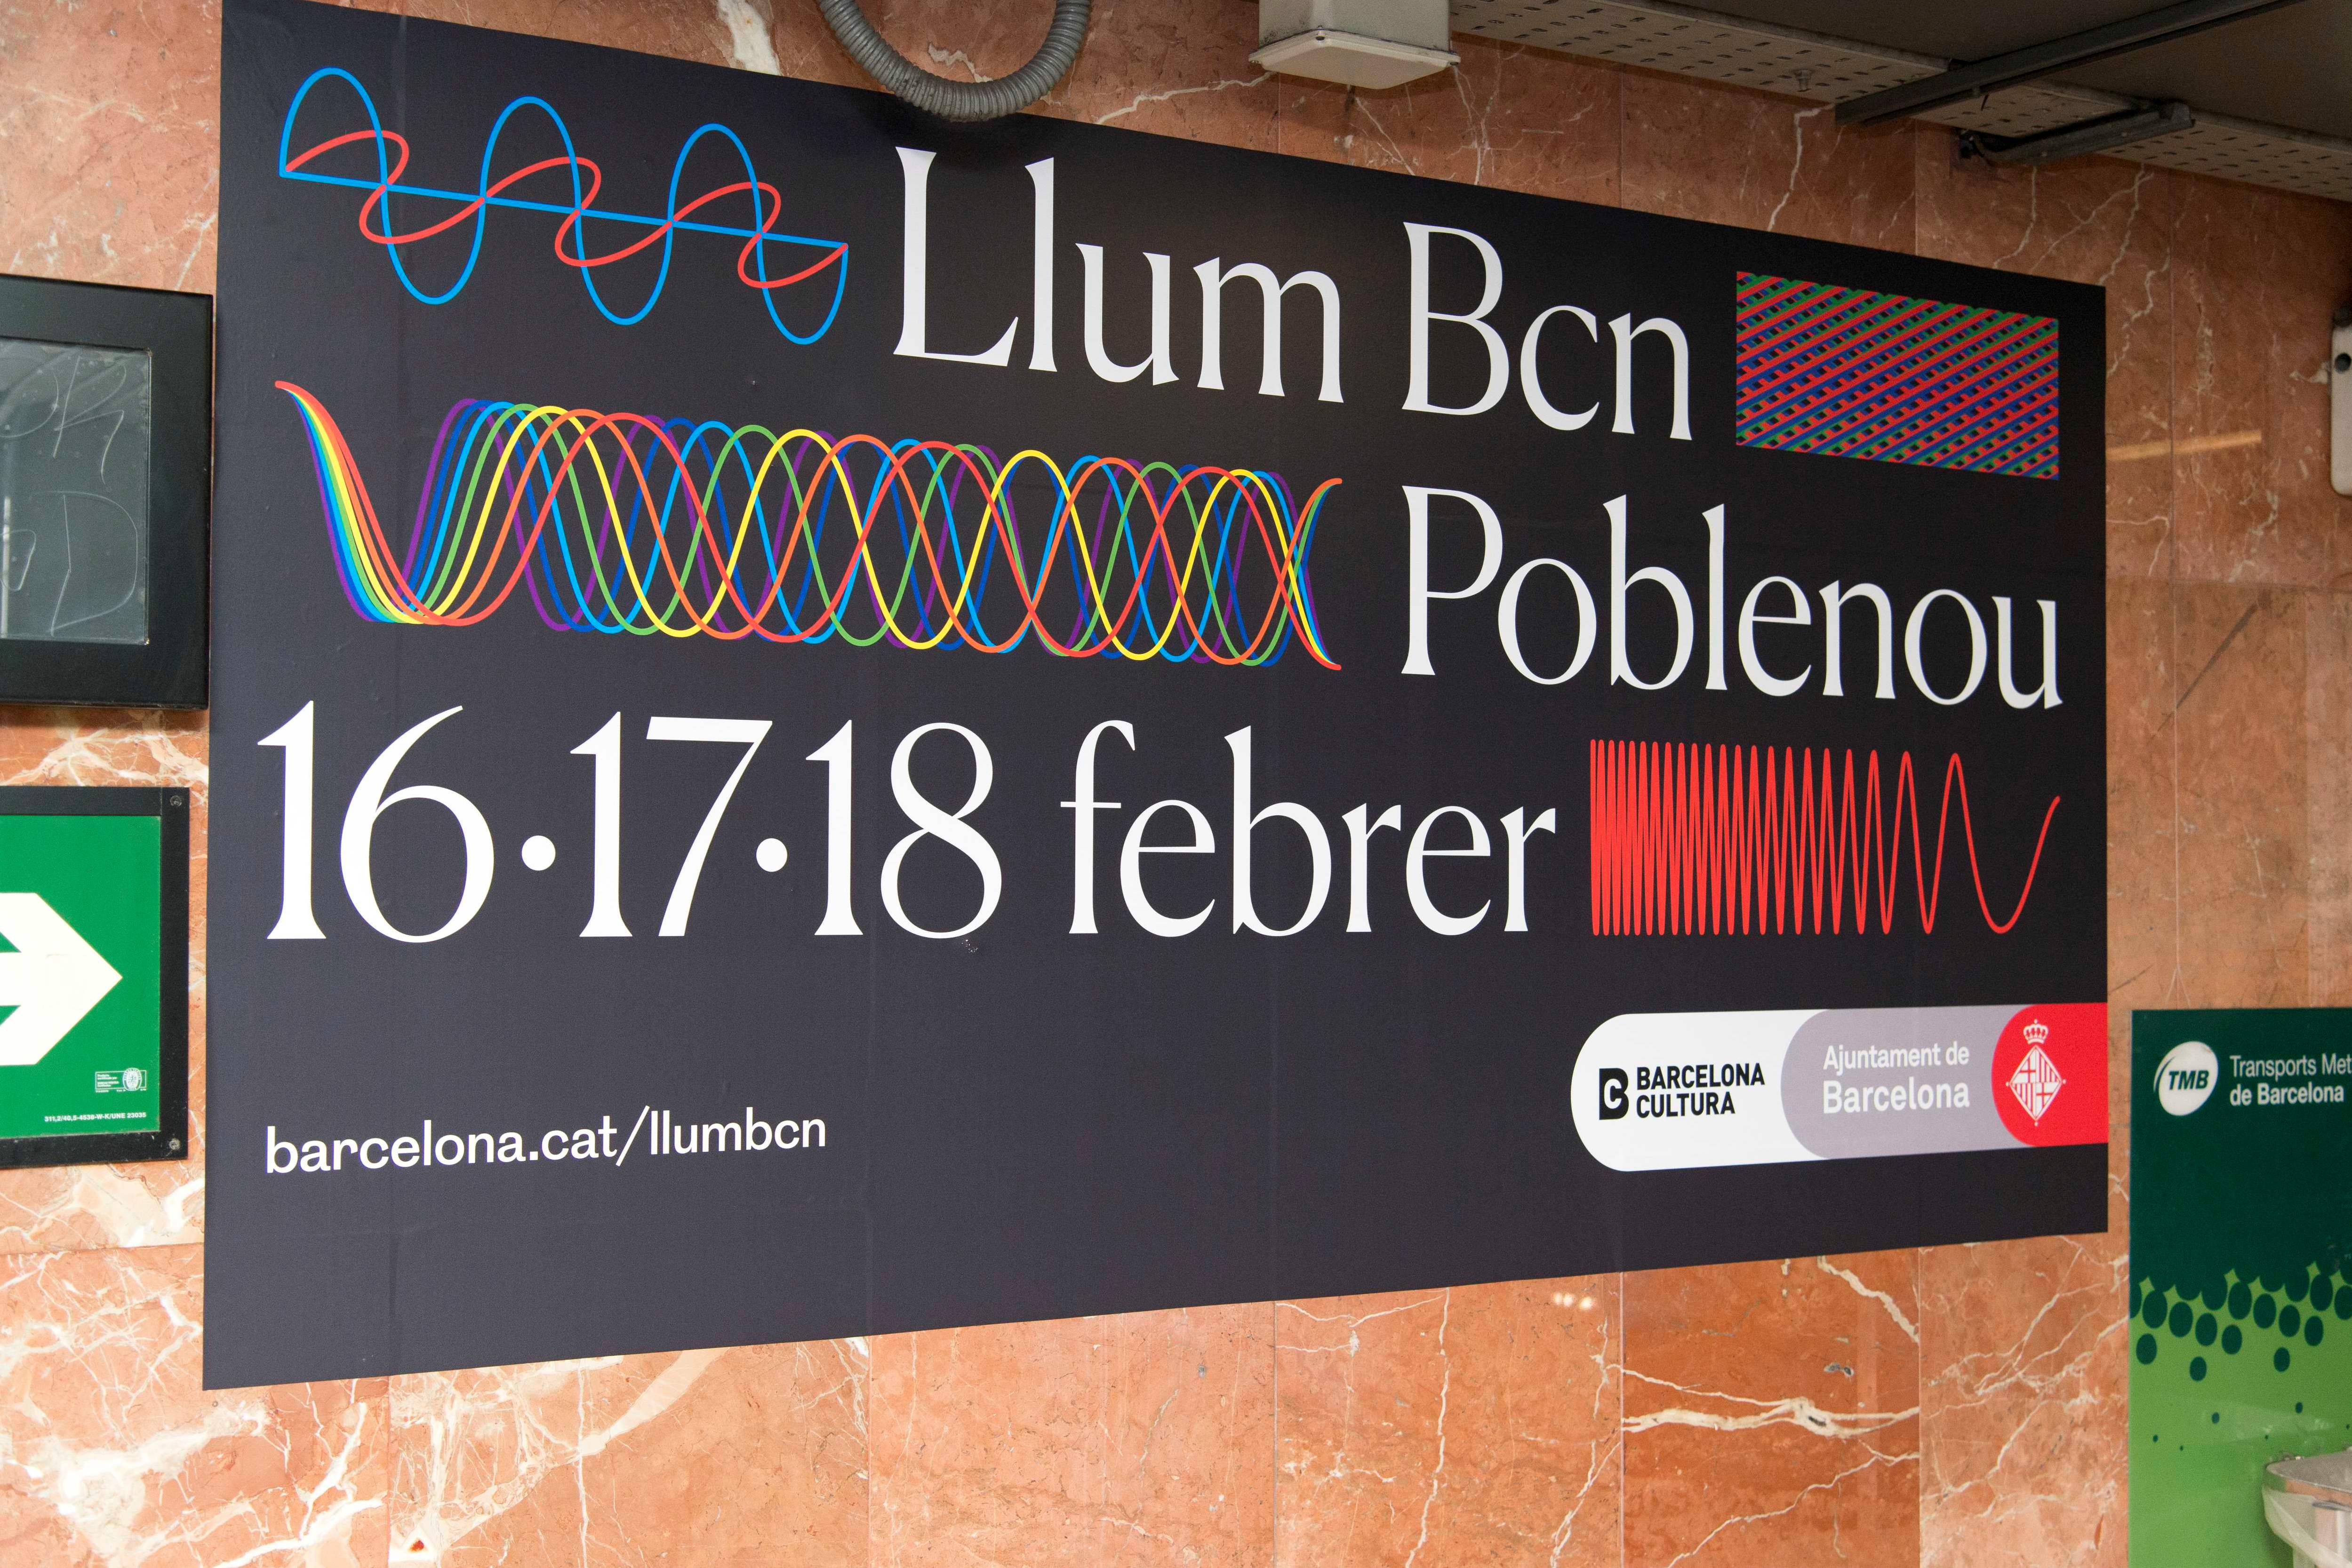 La línia 4 de metro et porta al festival Llum BCN al Poblenou / Foto: Miguel Ángel Cuartero (TMB)